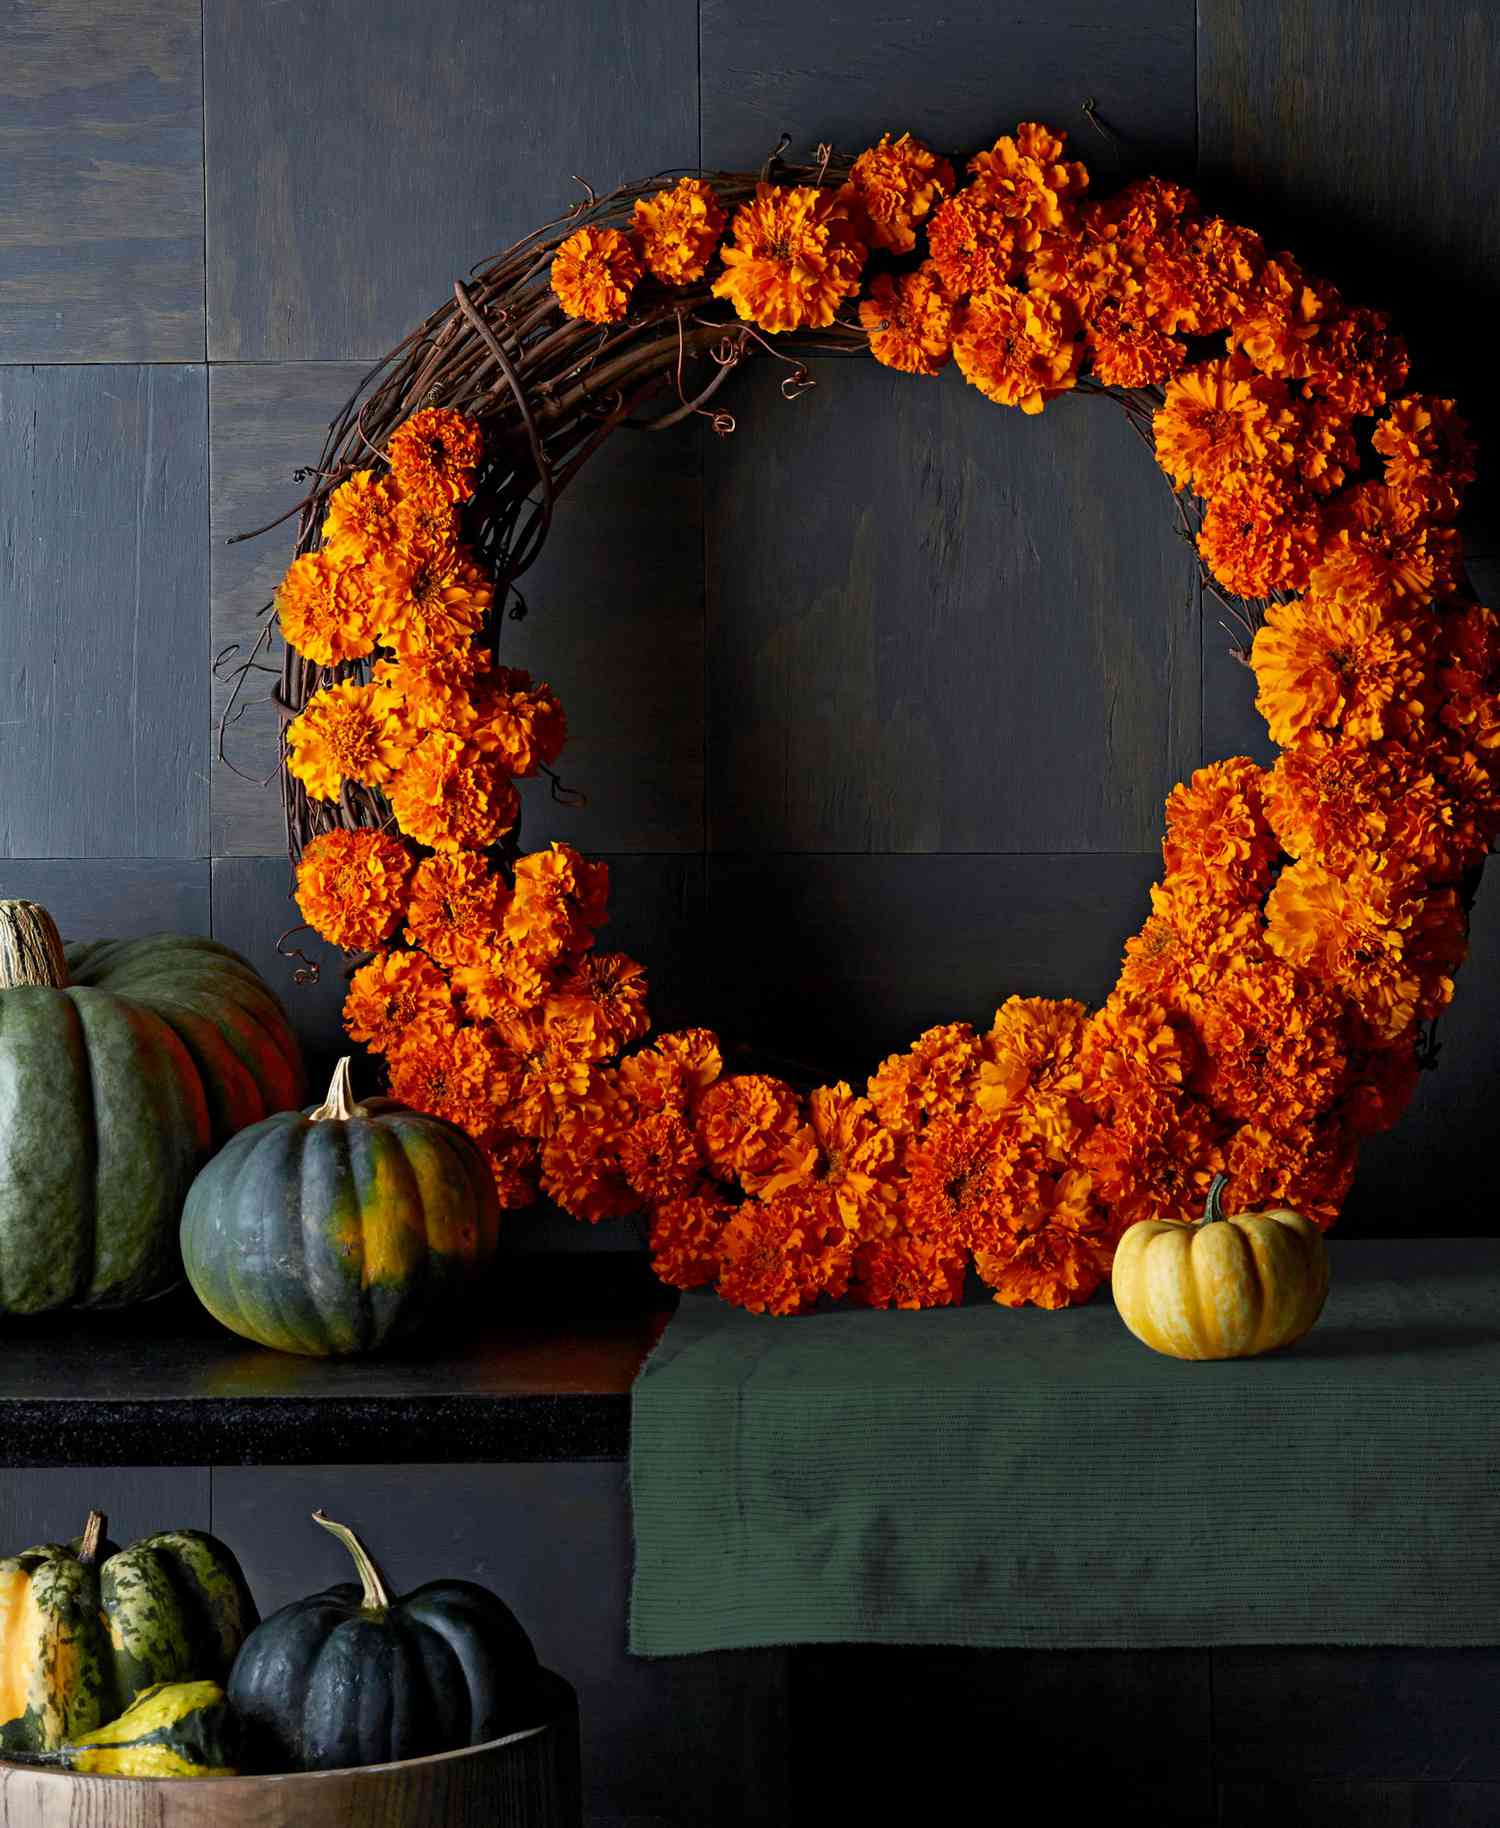 Fall Wreath Front Door Wreath Autumn &Pumpkins Berry for Fall Thanksgiving Decor 